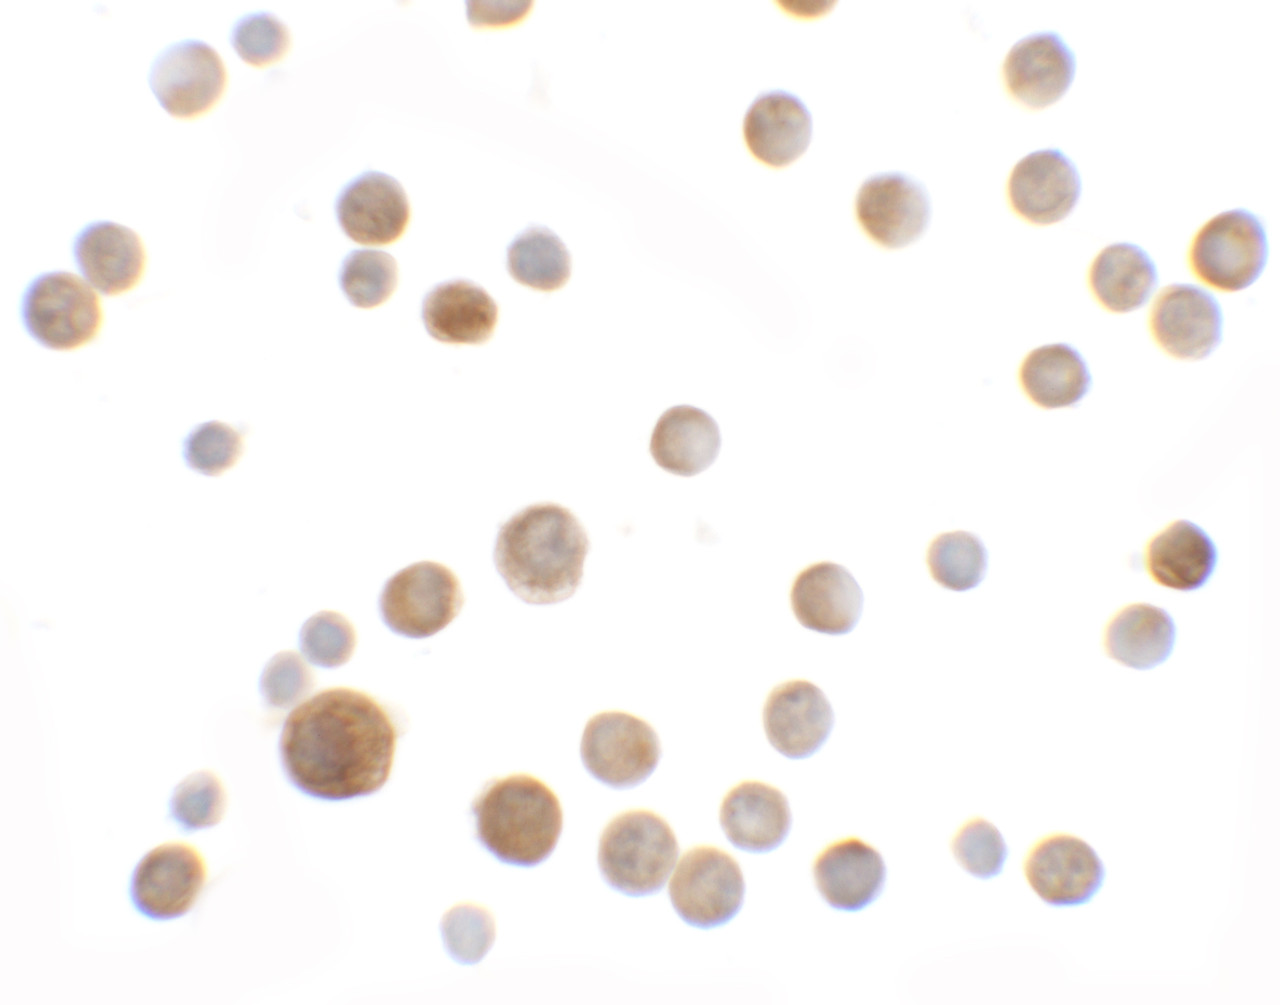 Immunocytochemistry of SLC35D2 in HeLa cells with SLC35D2 antibody at 5 ug/mL.